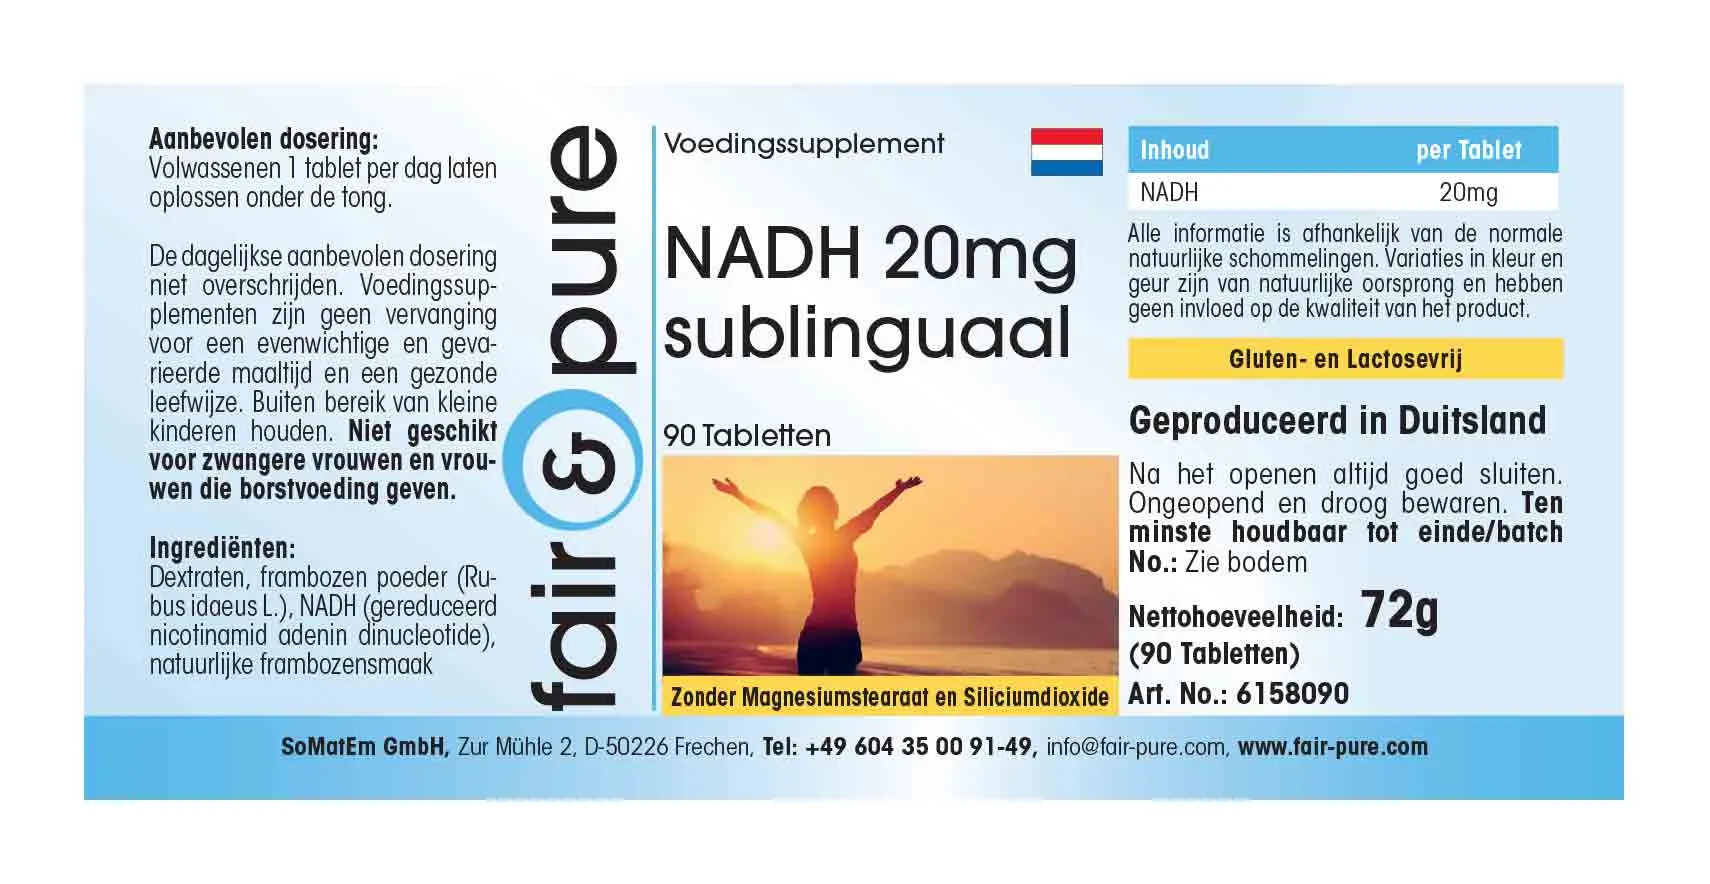  NADH 20mg sublinguaal